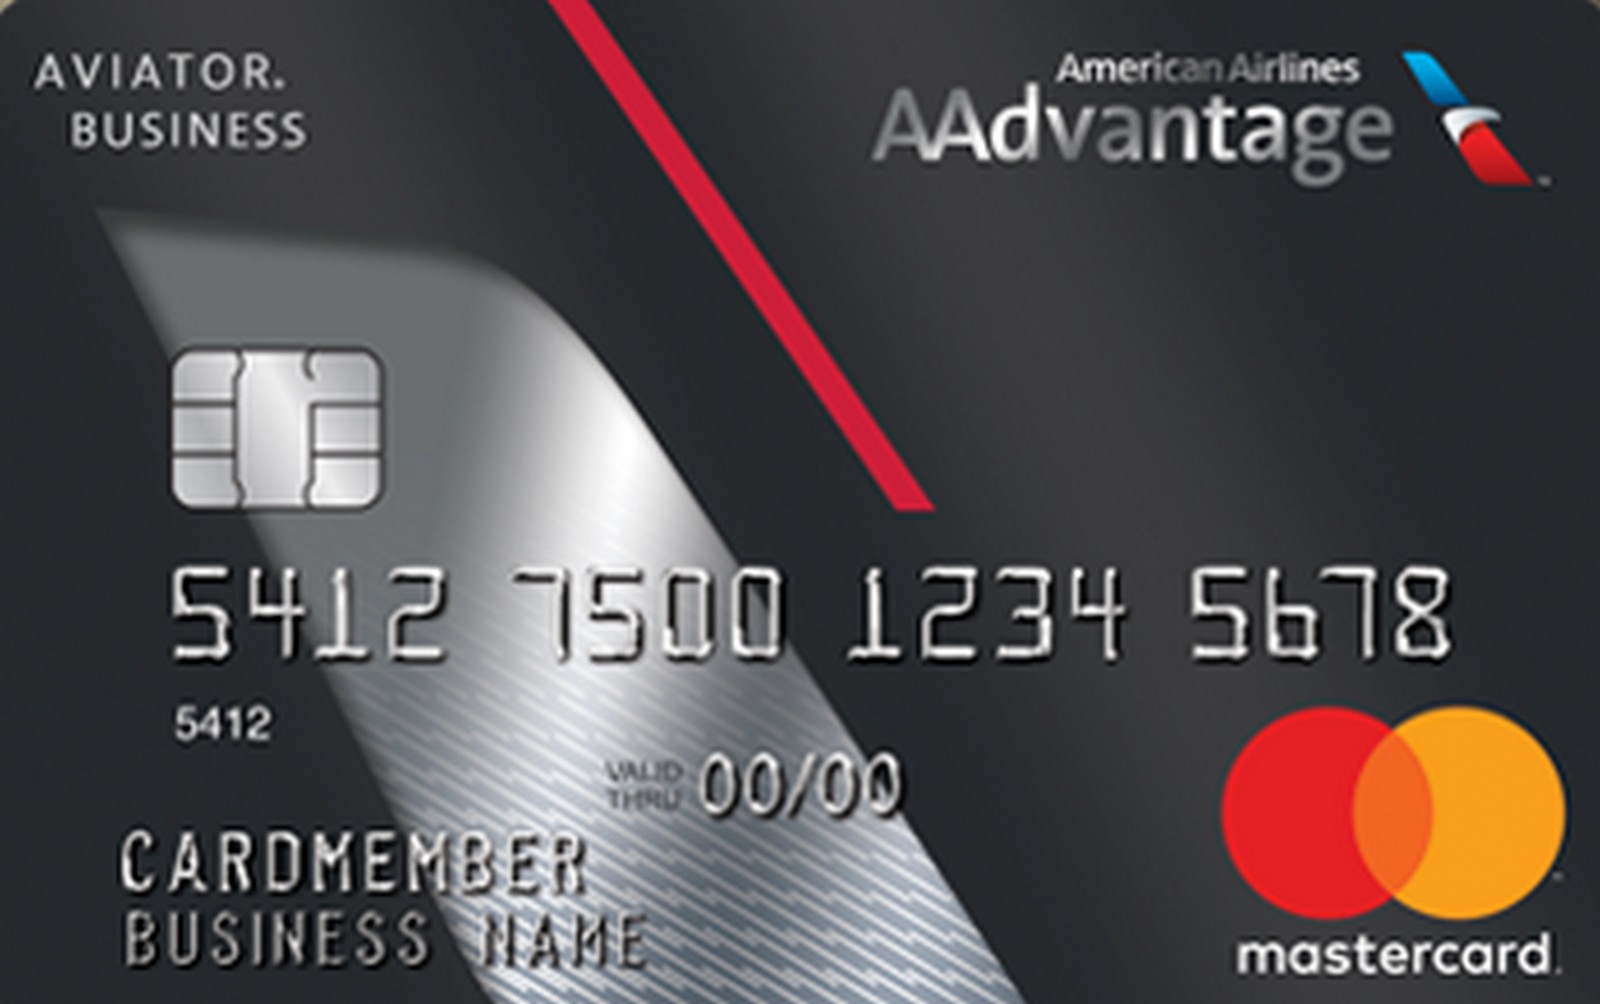 Barclays AAdvantage Aviator Business Card 80K bonus